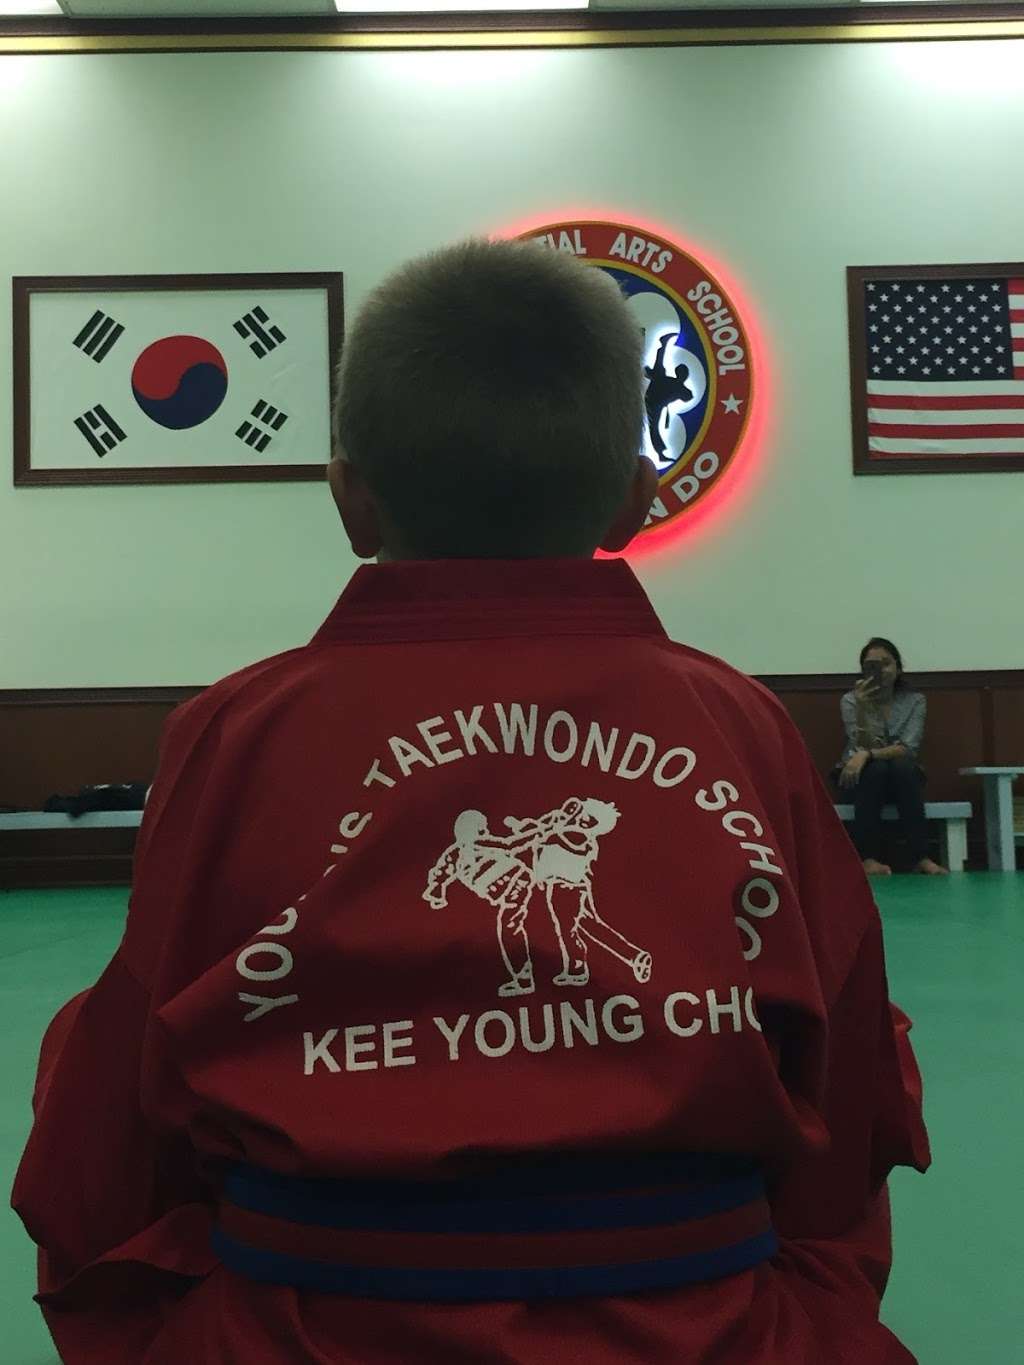 Youngs Martial Arts School | 106 Woodbury Rd, Woodbury, NY 11797, USA | Phone: (516) 224-4822